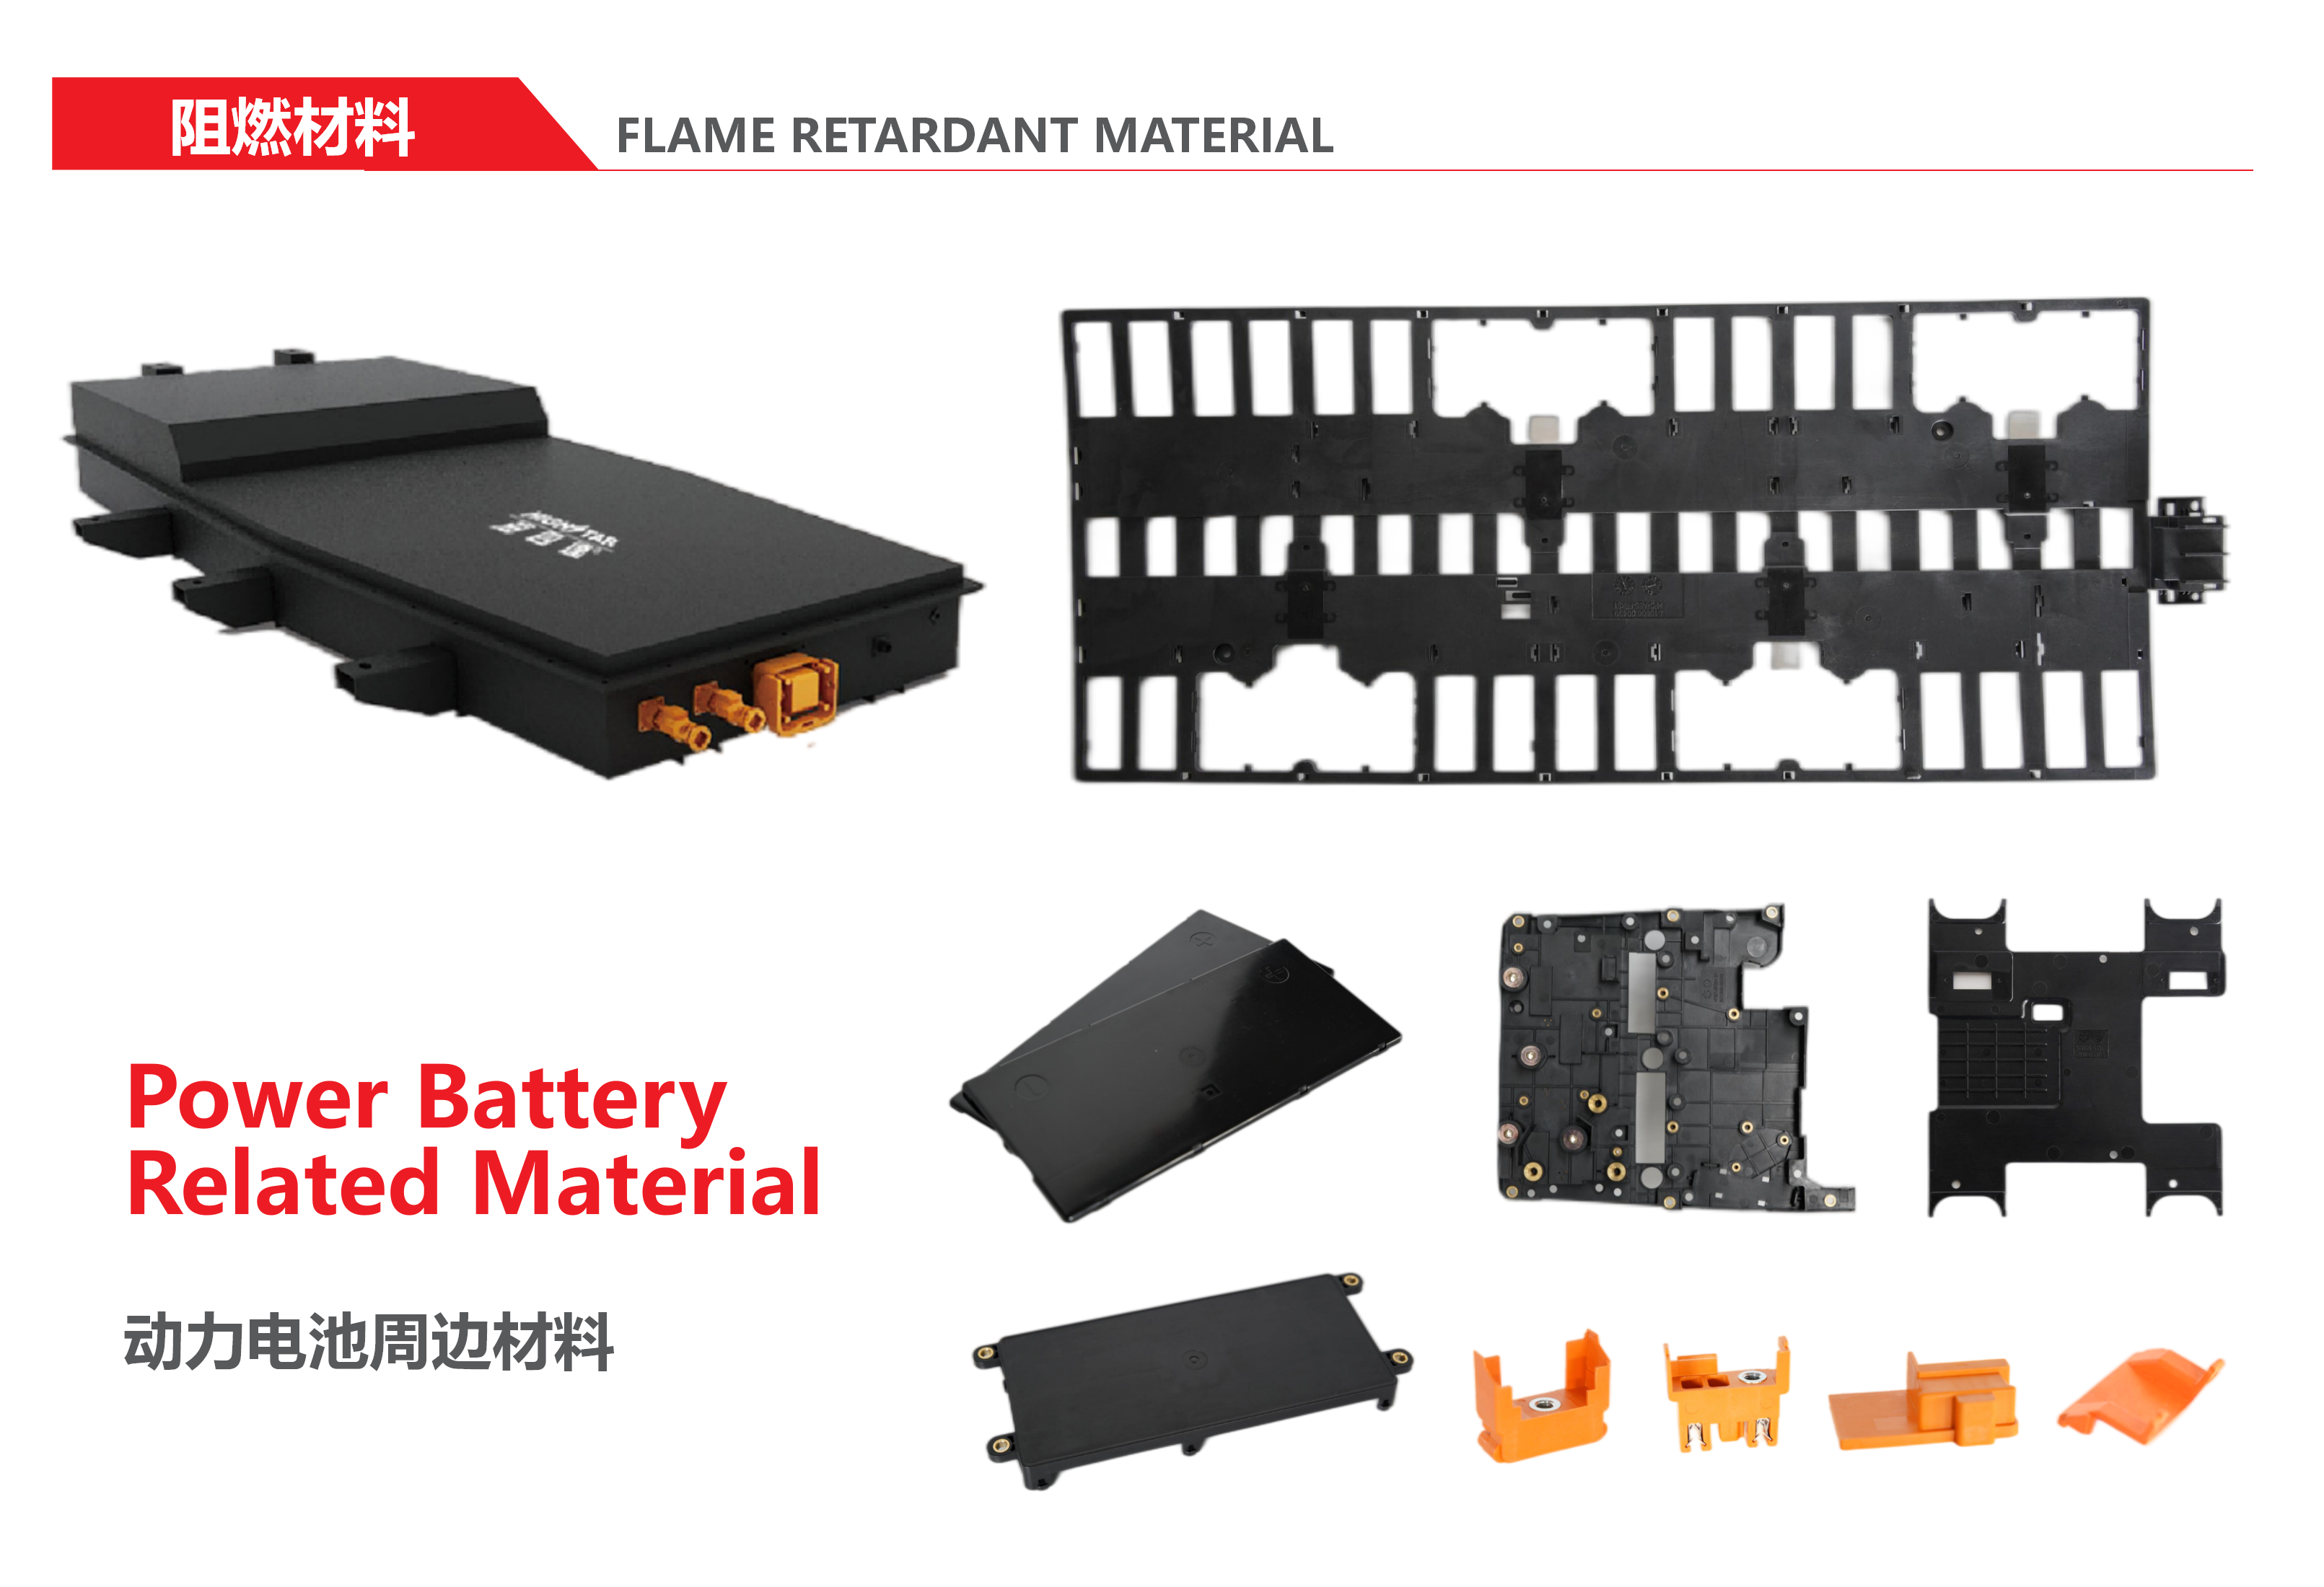 Flame Retardant Material For Power Battery SliderImage